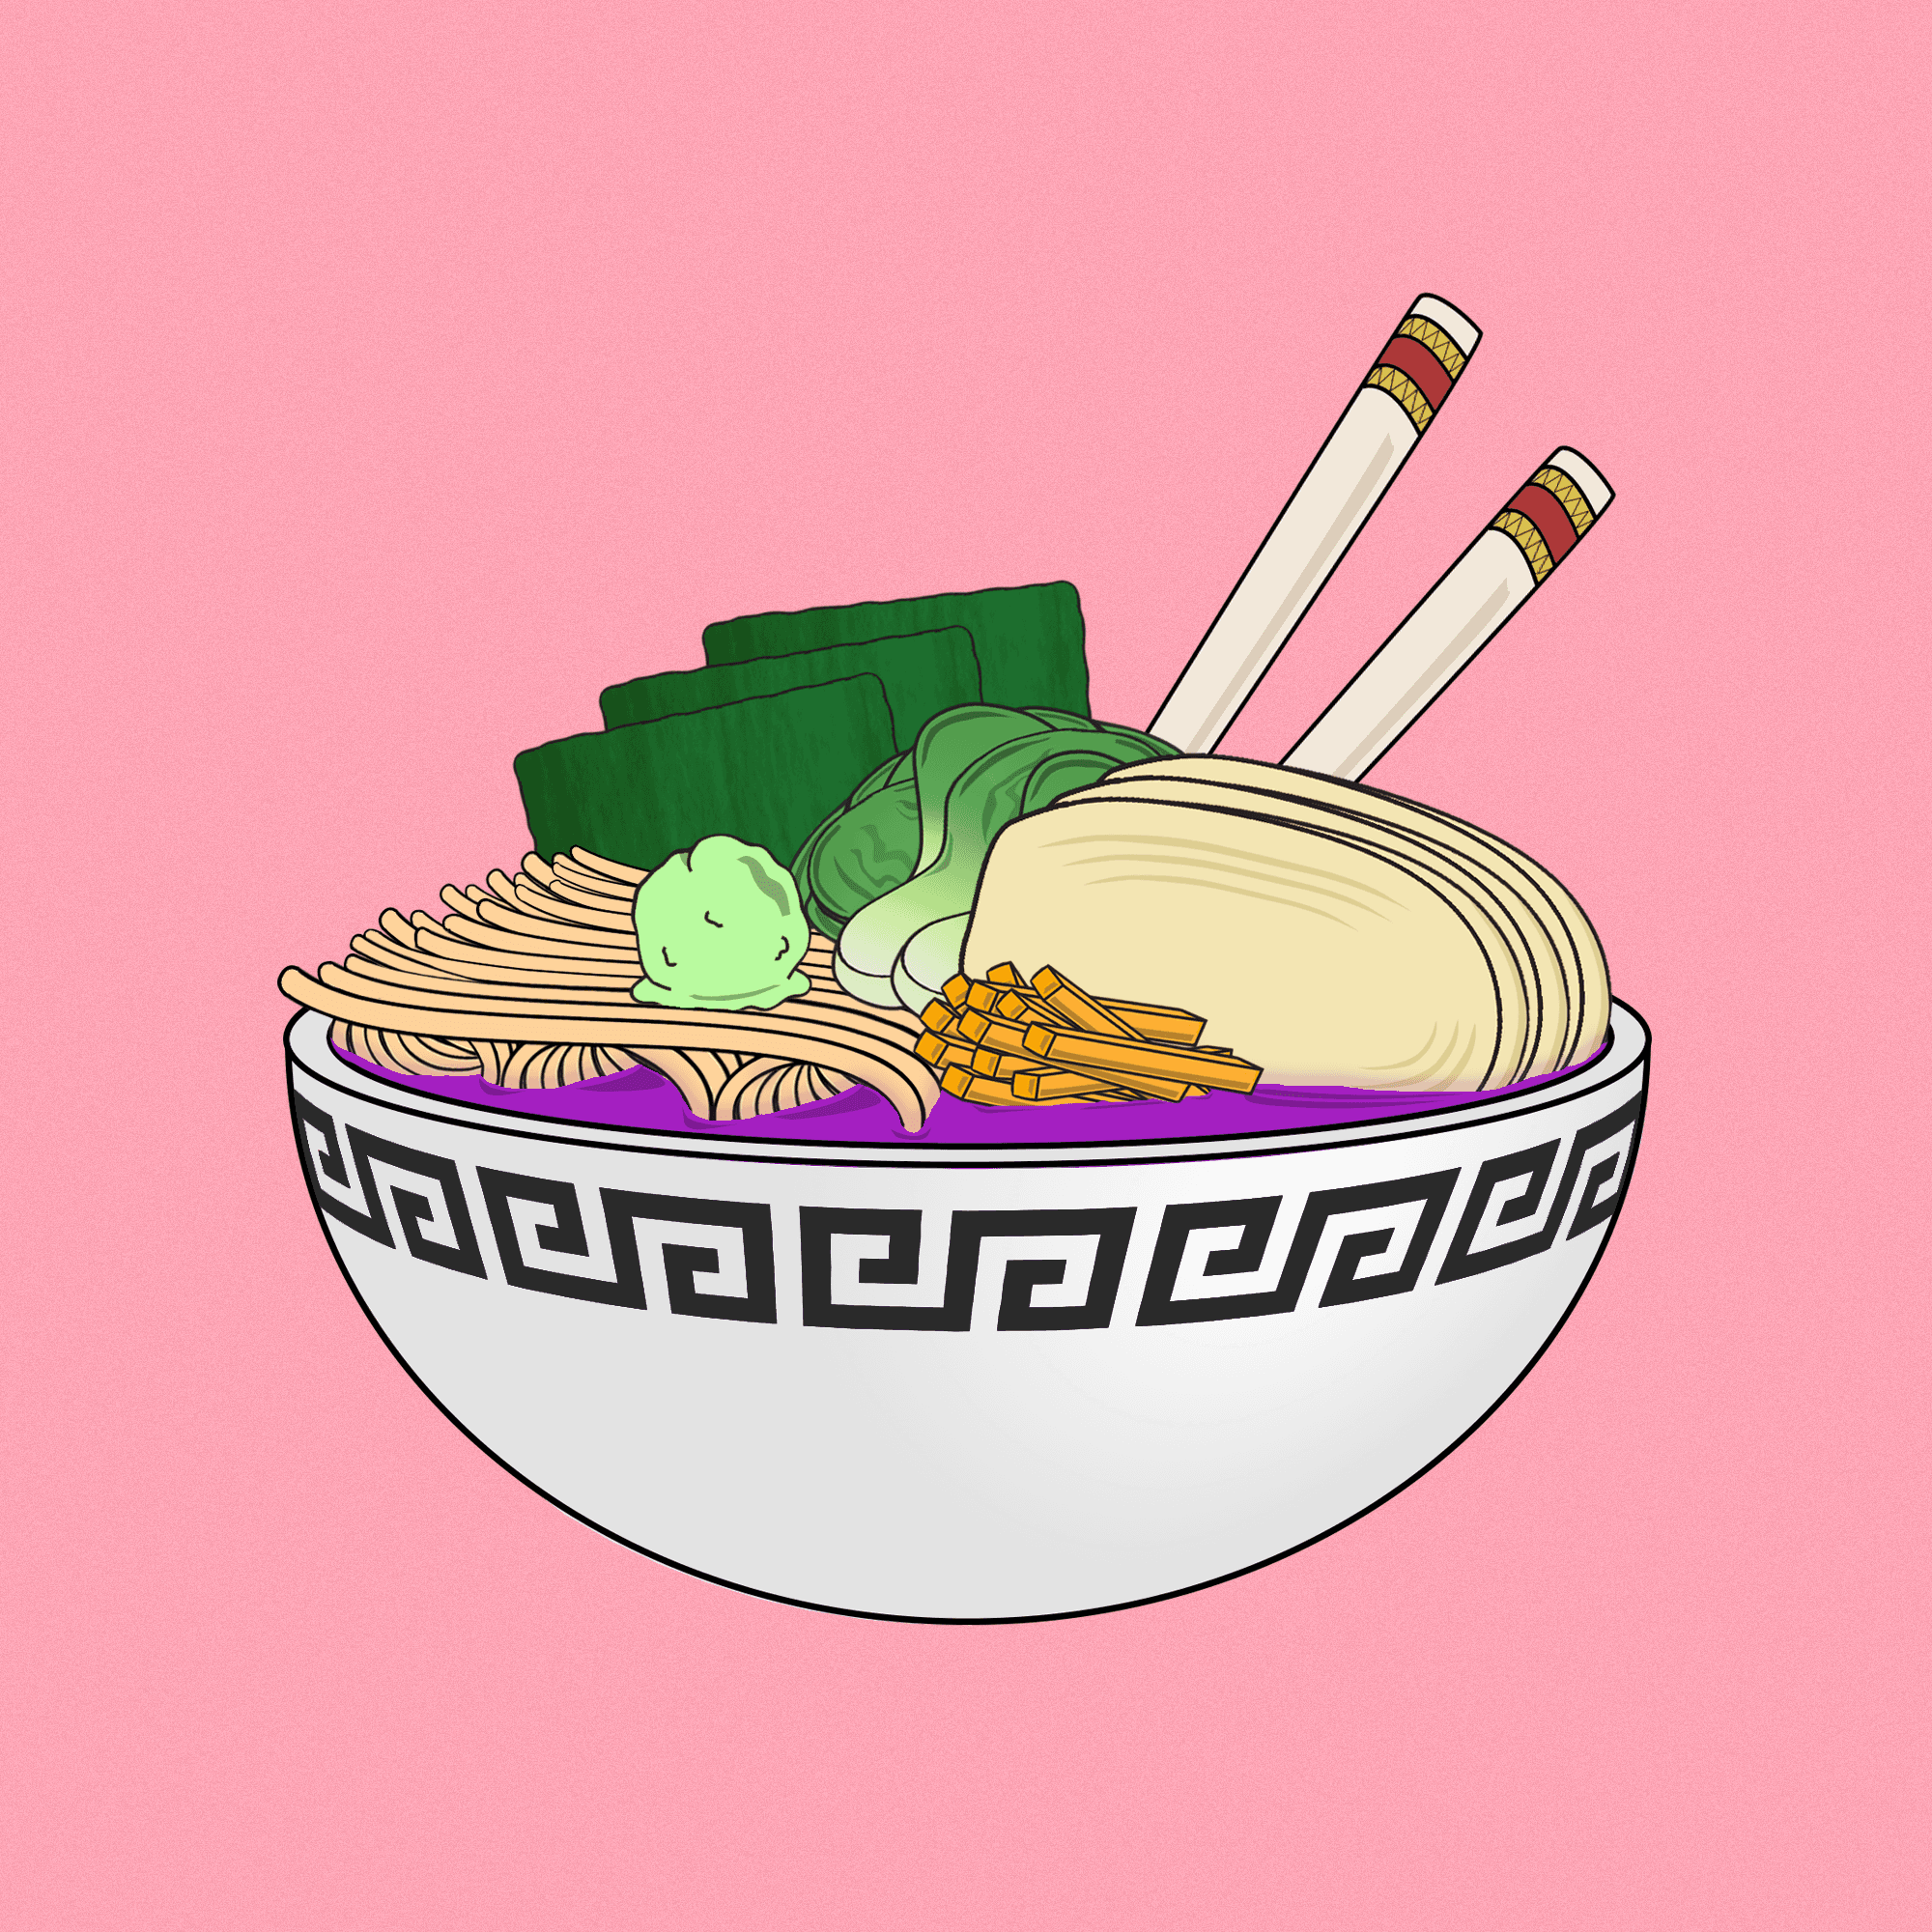 Noodl #10